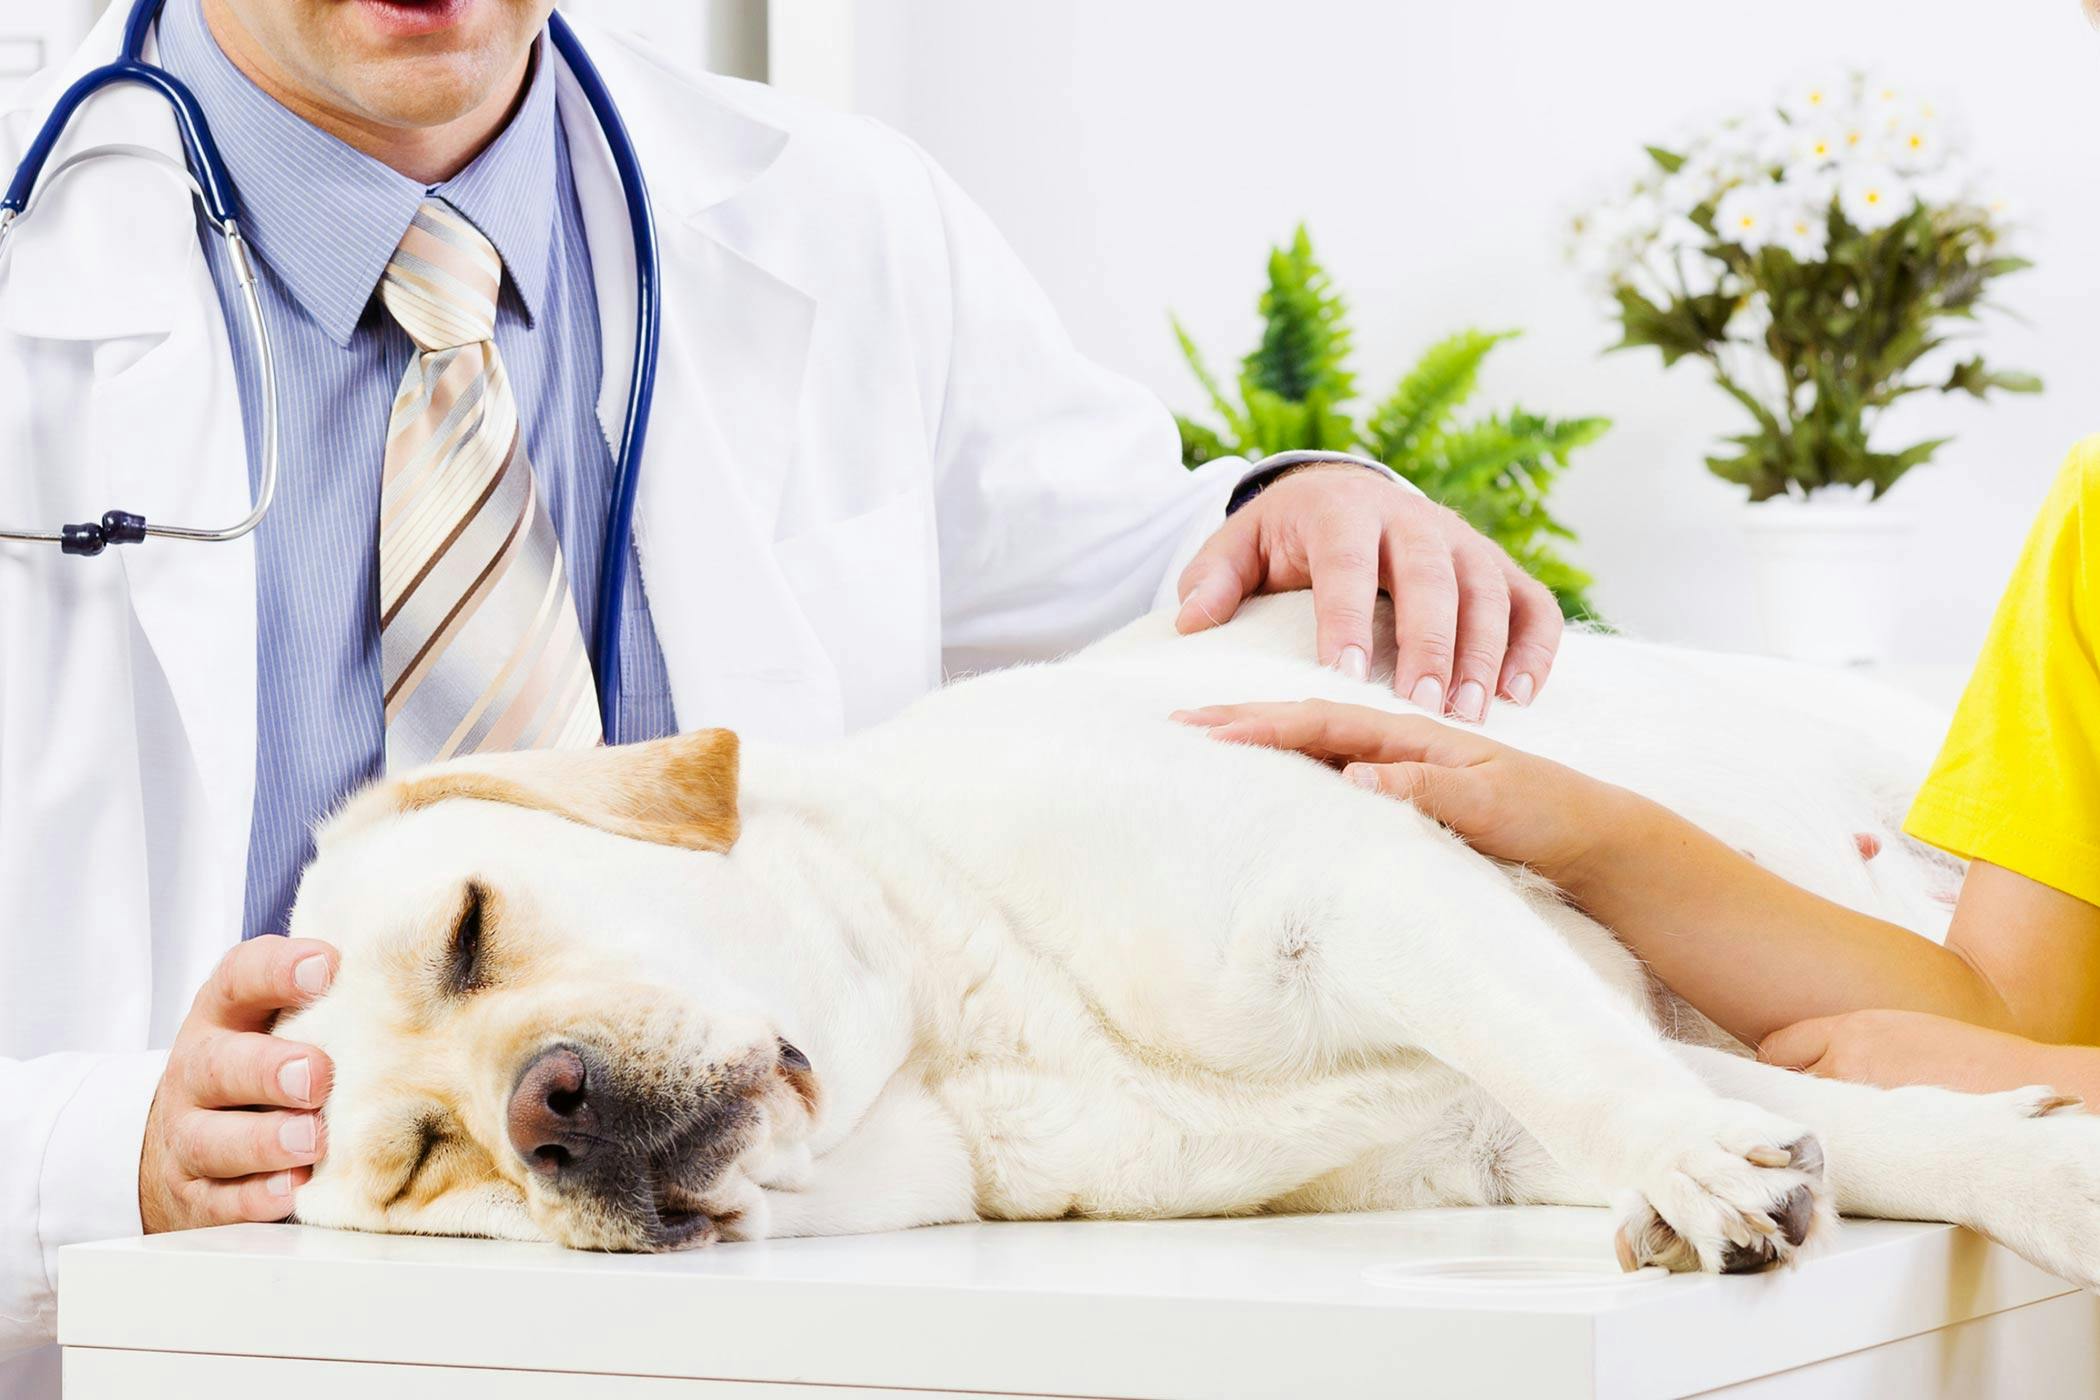 prostate adenocarcinoma in dogs)